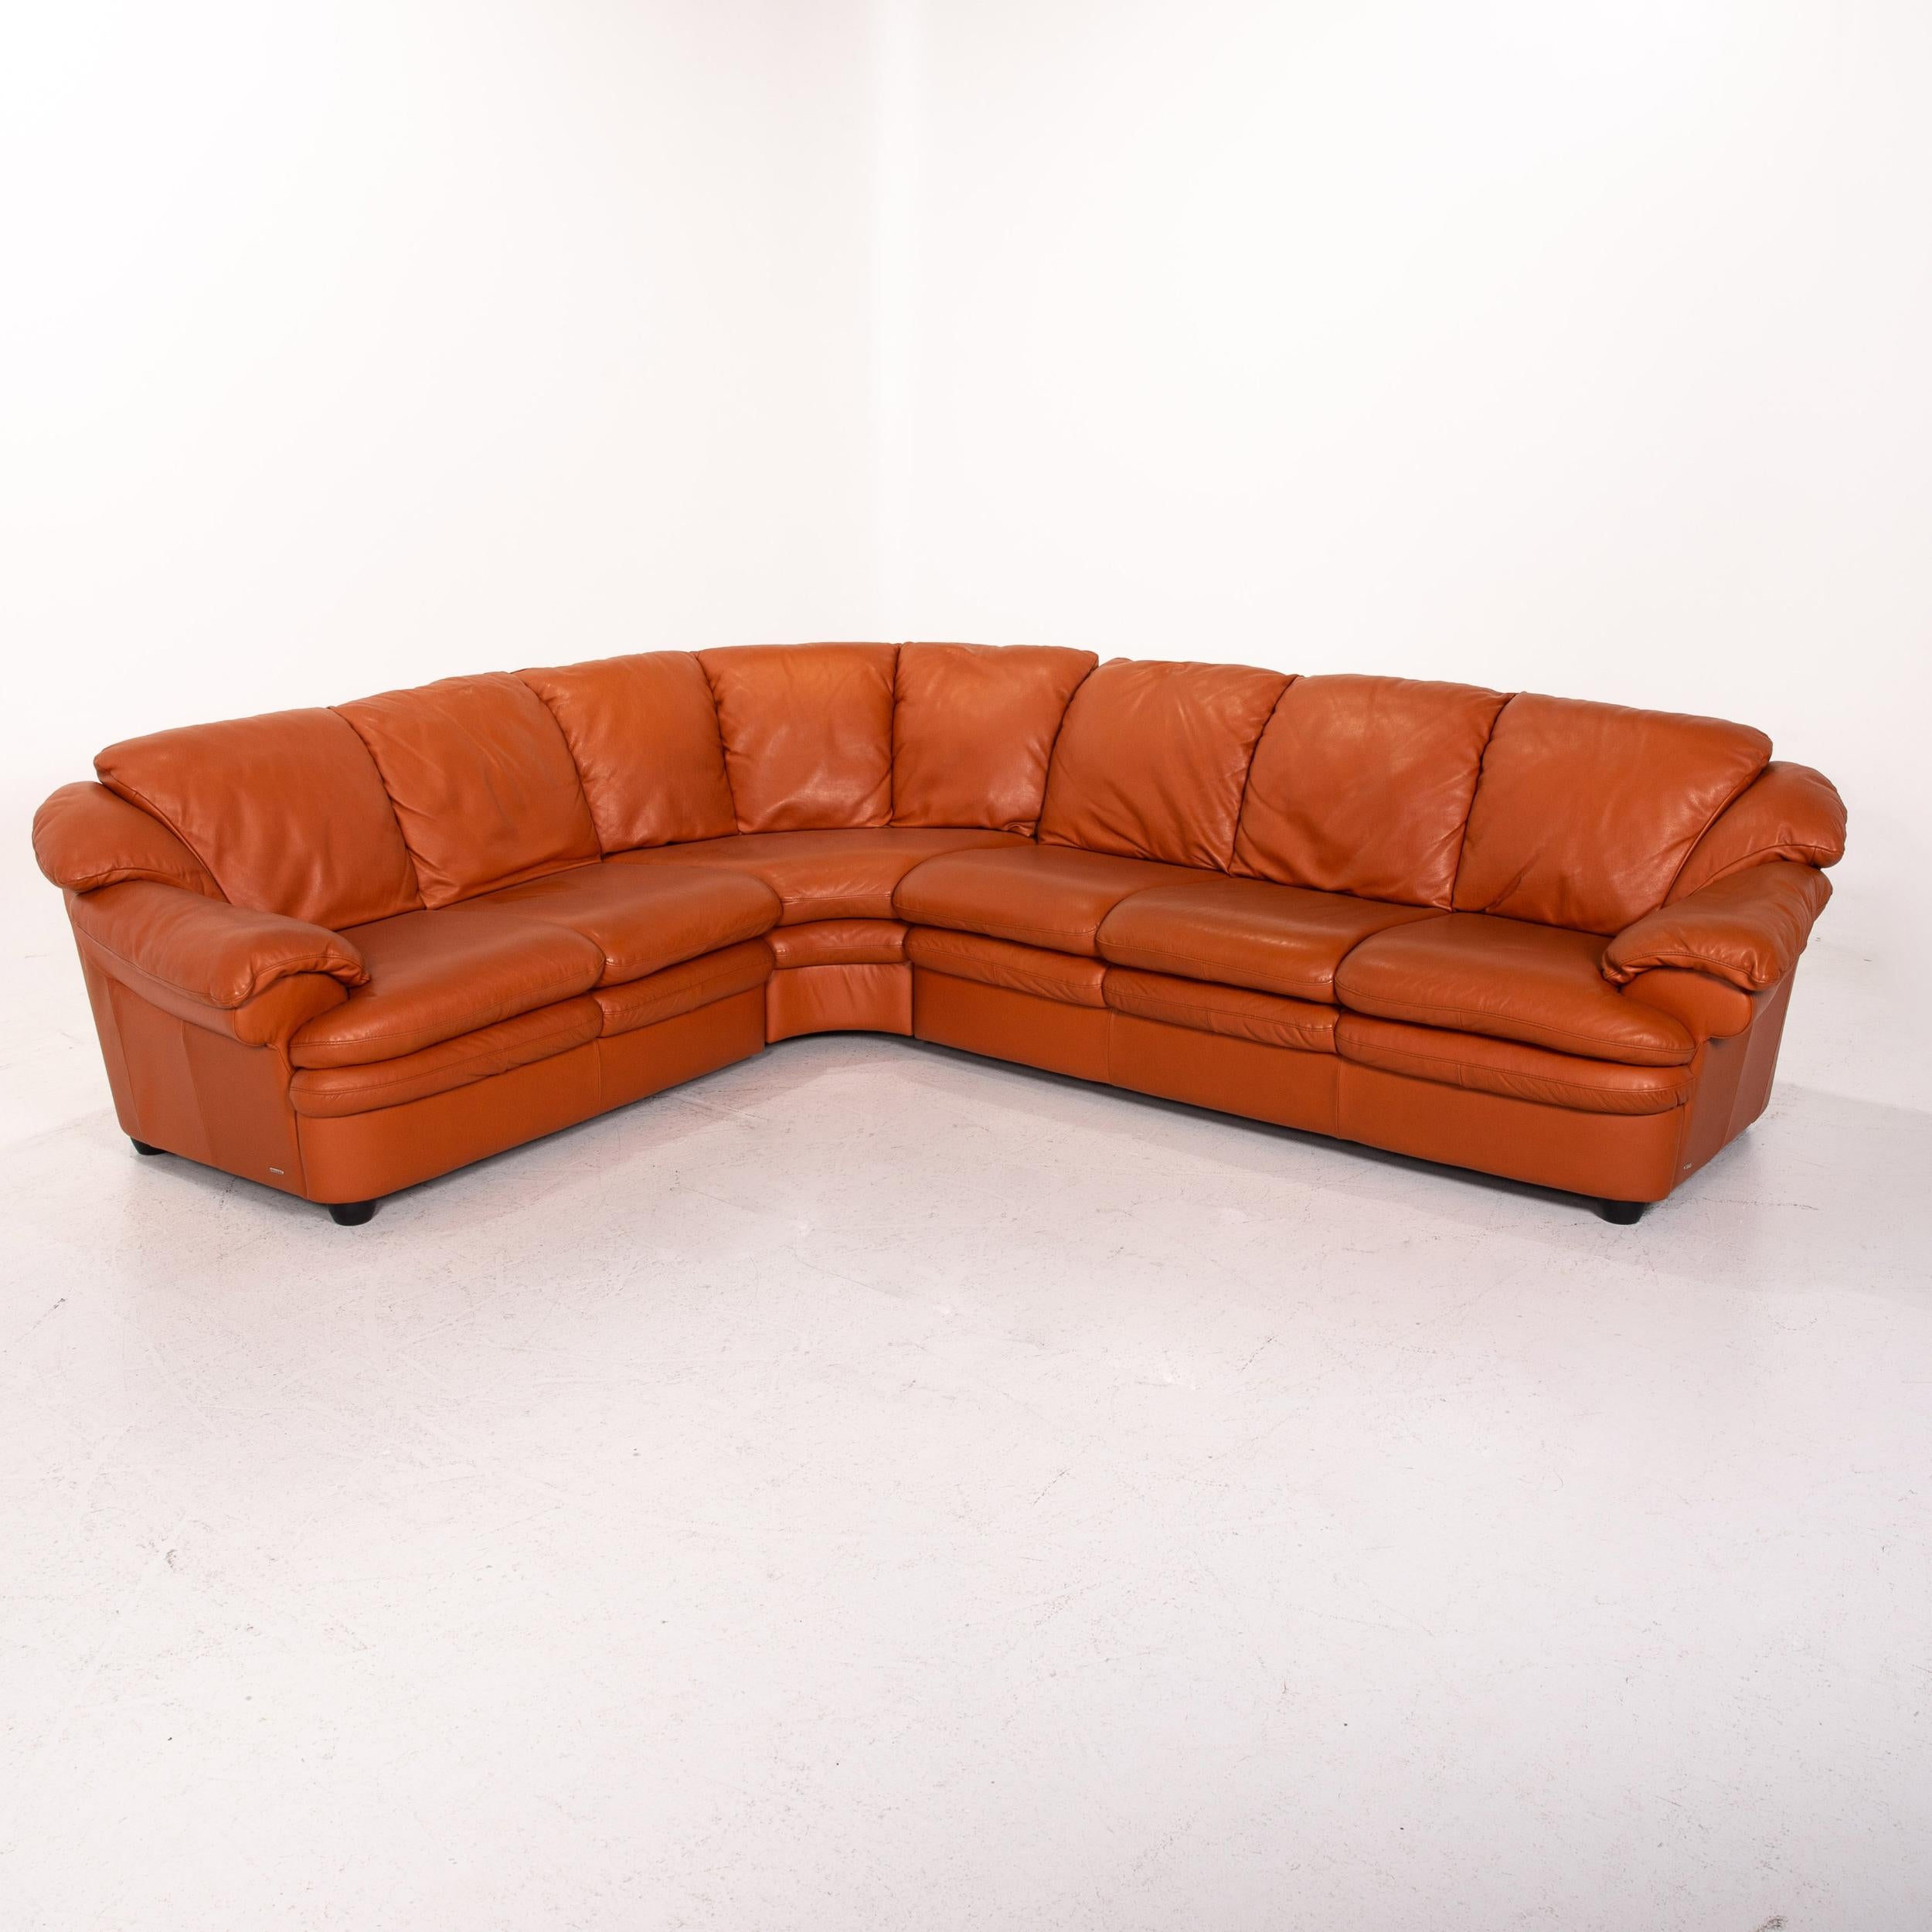 Natuzzi Leather Corner Sofa Terracotta Orange Sofa Couch For Sale 2